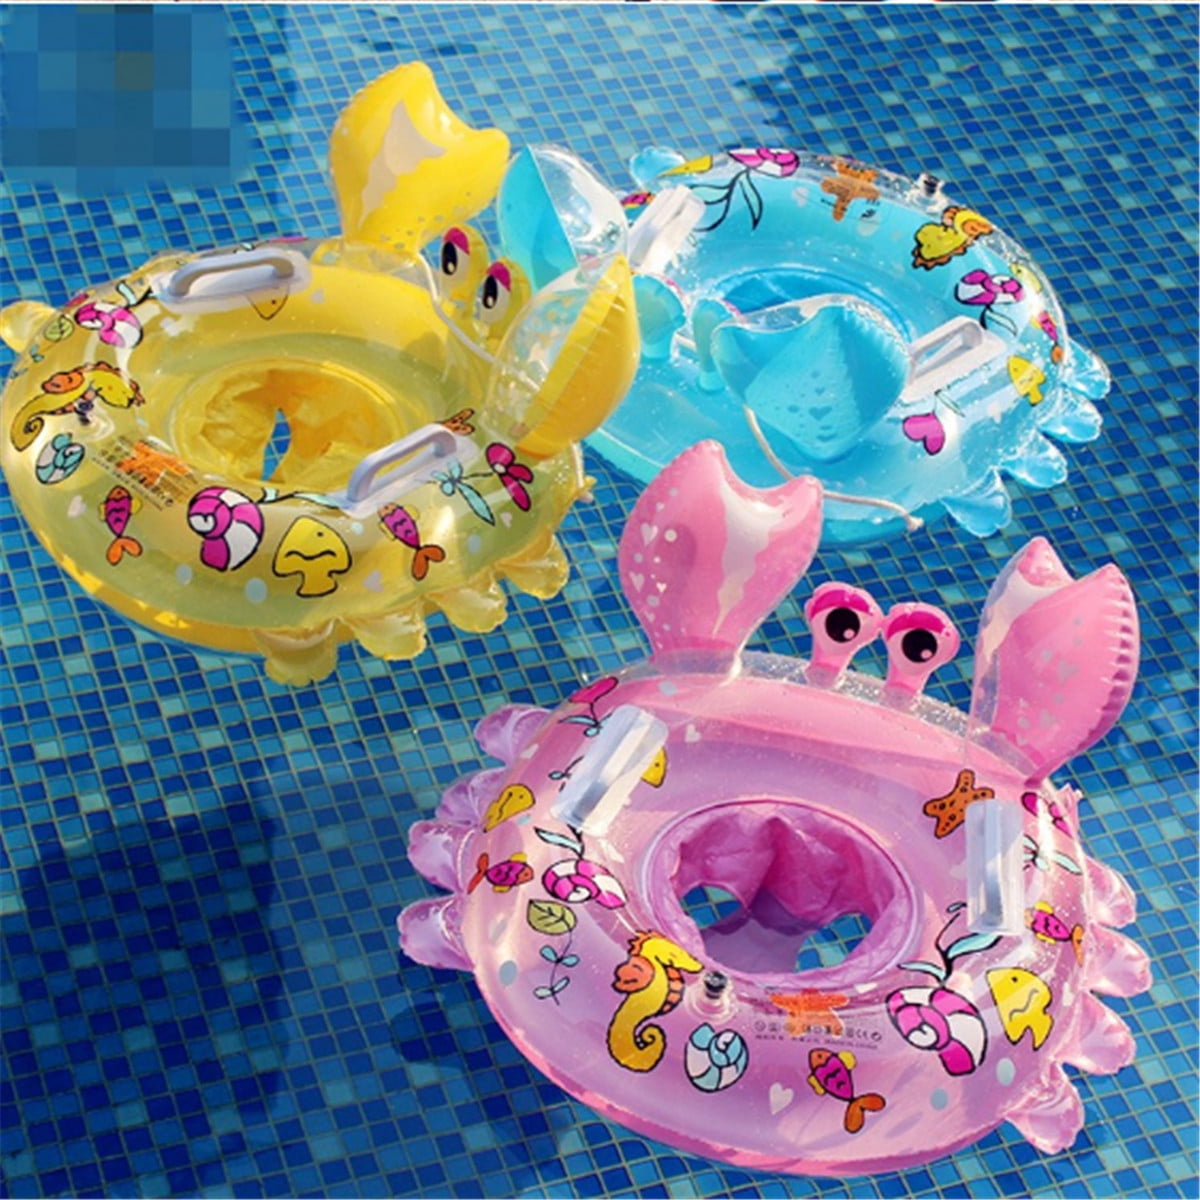 Mufee Swim Ring Baby Swim Seat Baby Buoyancy Aid with Swim Seat PVC for Toddler Buoyancy Aid Toys 6 Months to 36 Months Blue 1C